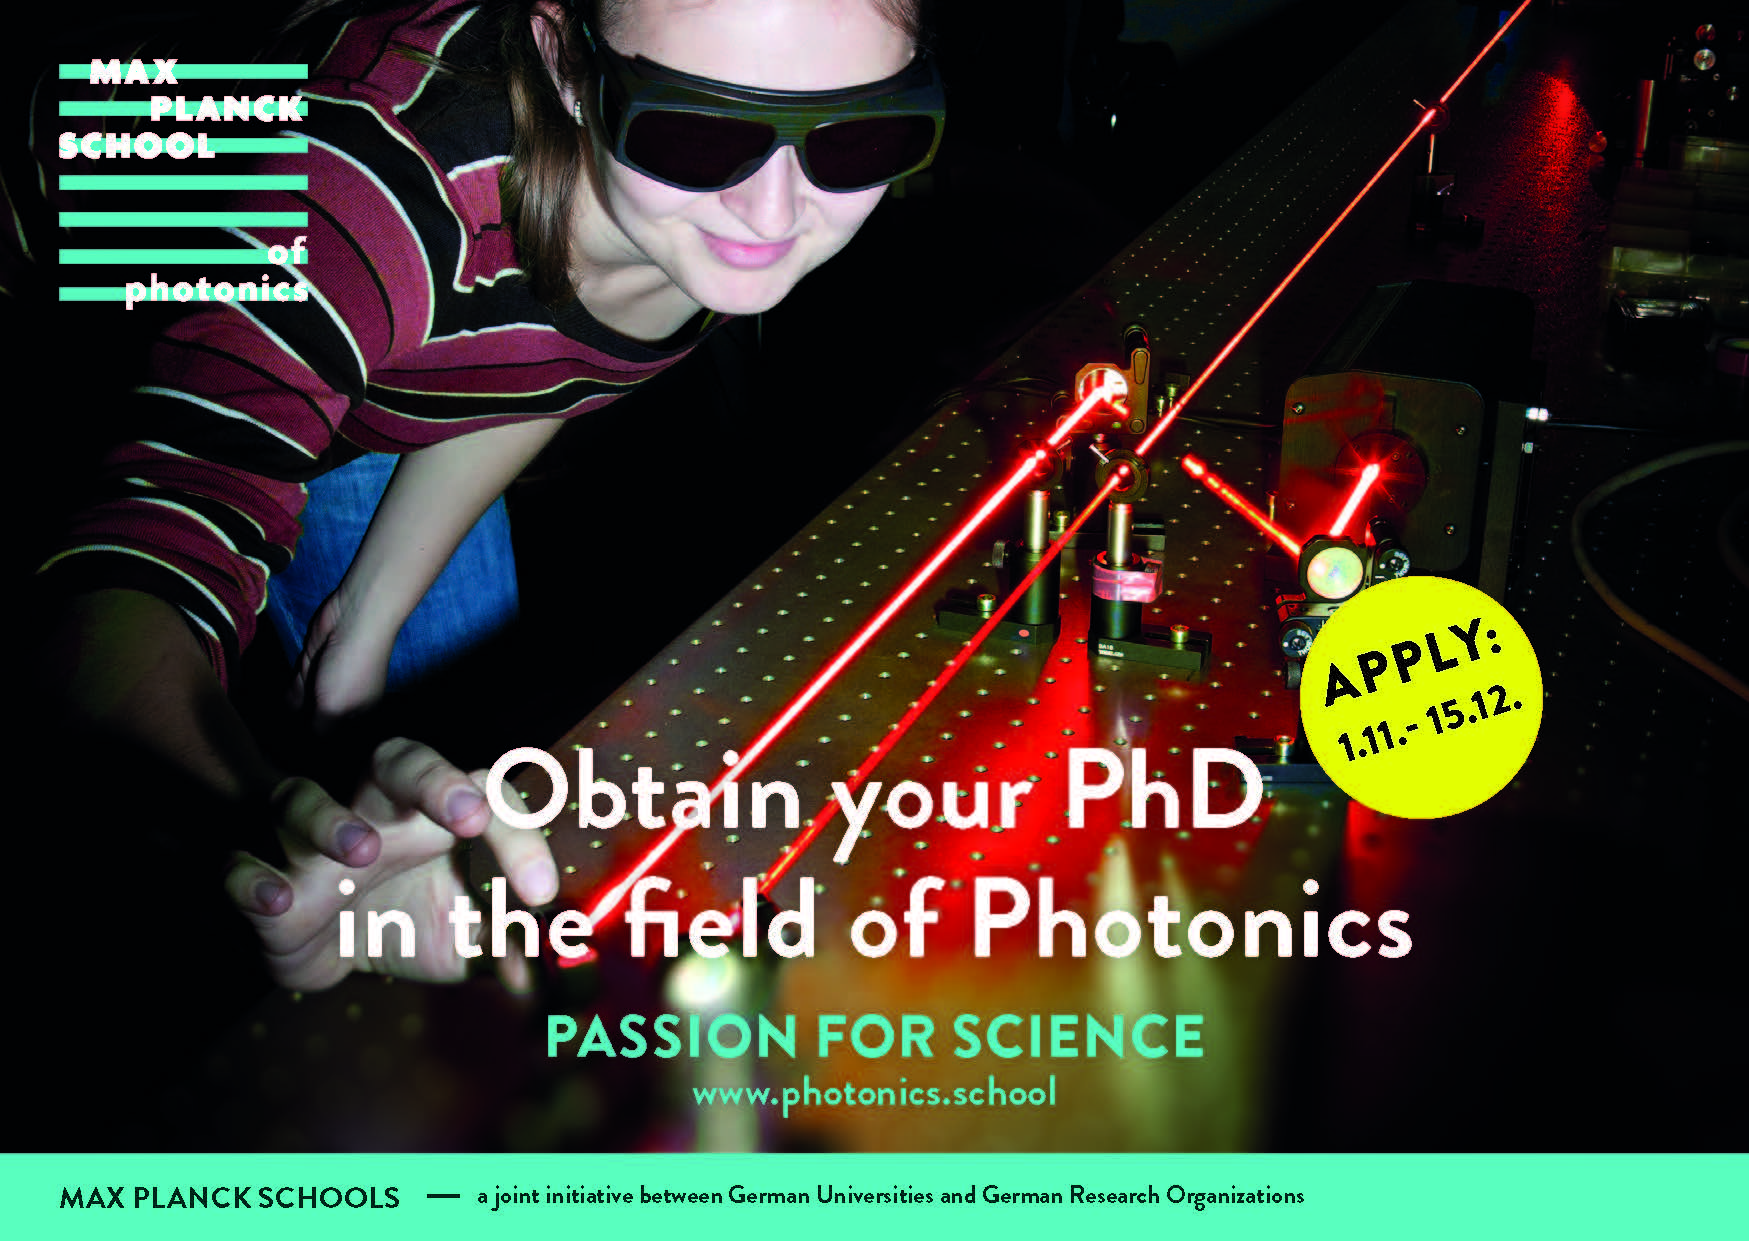 Max Planck School of Photonics – Application Portal open NOW